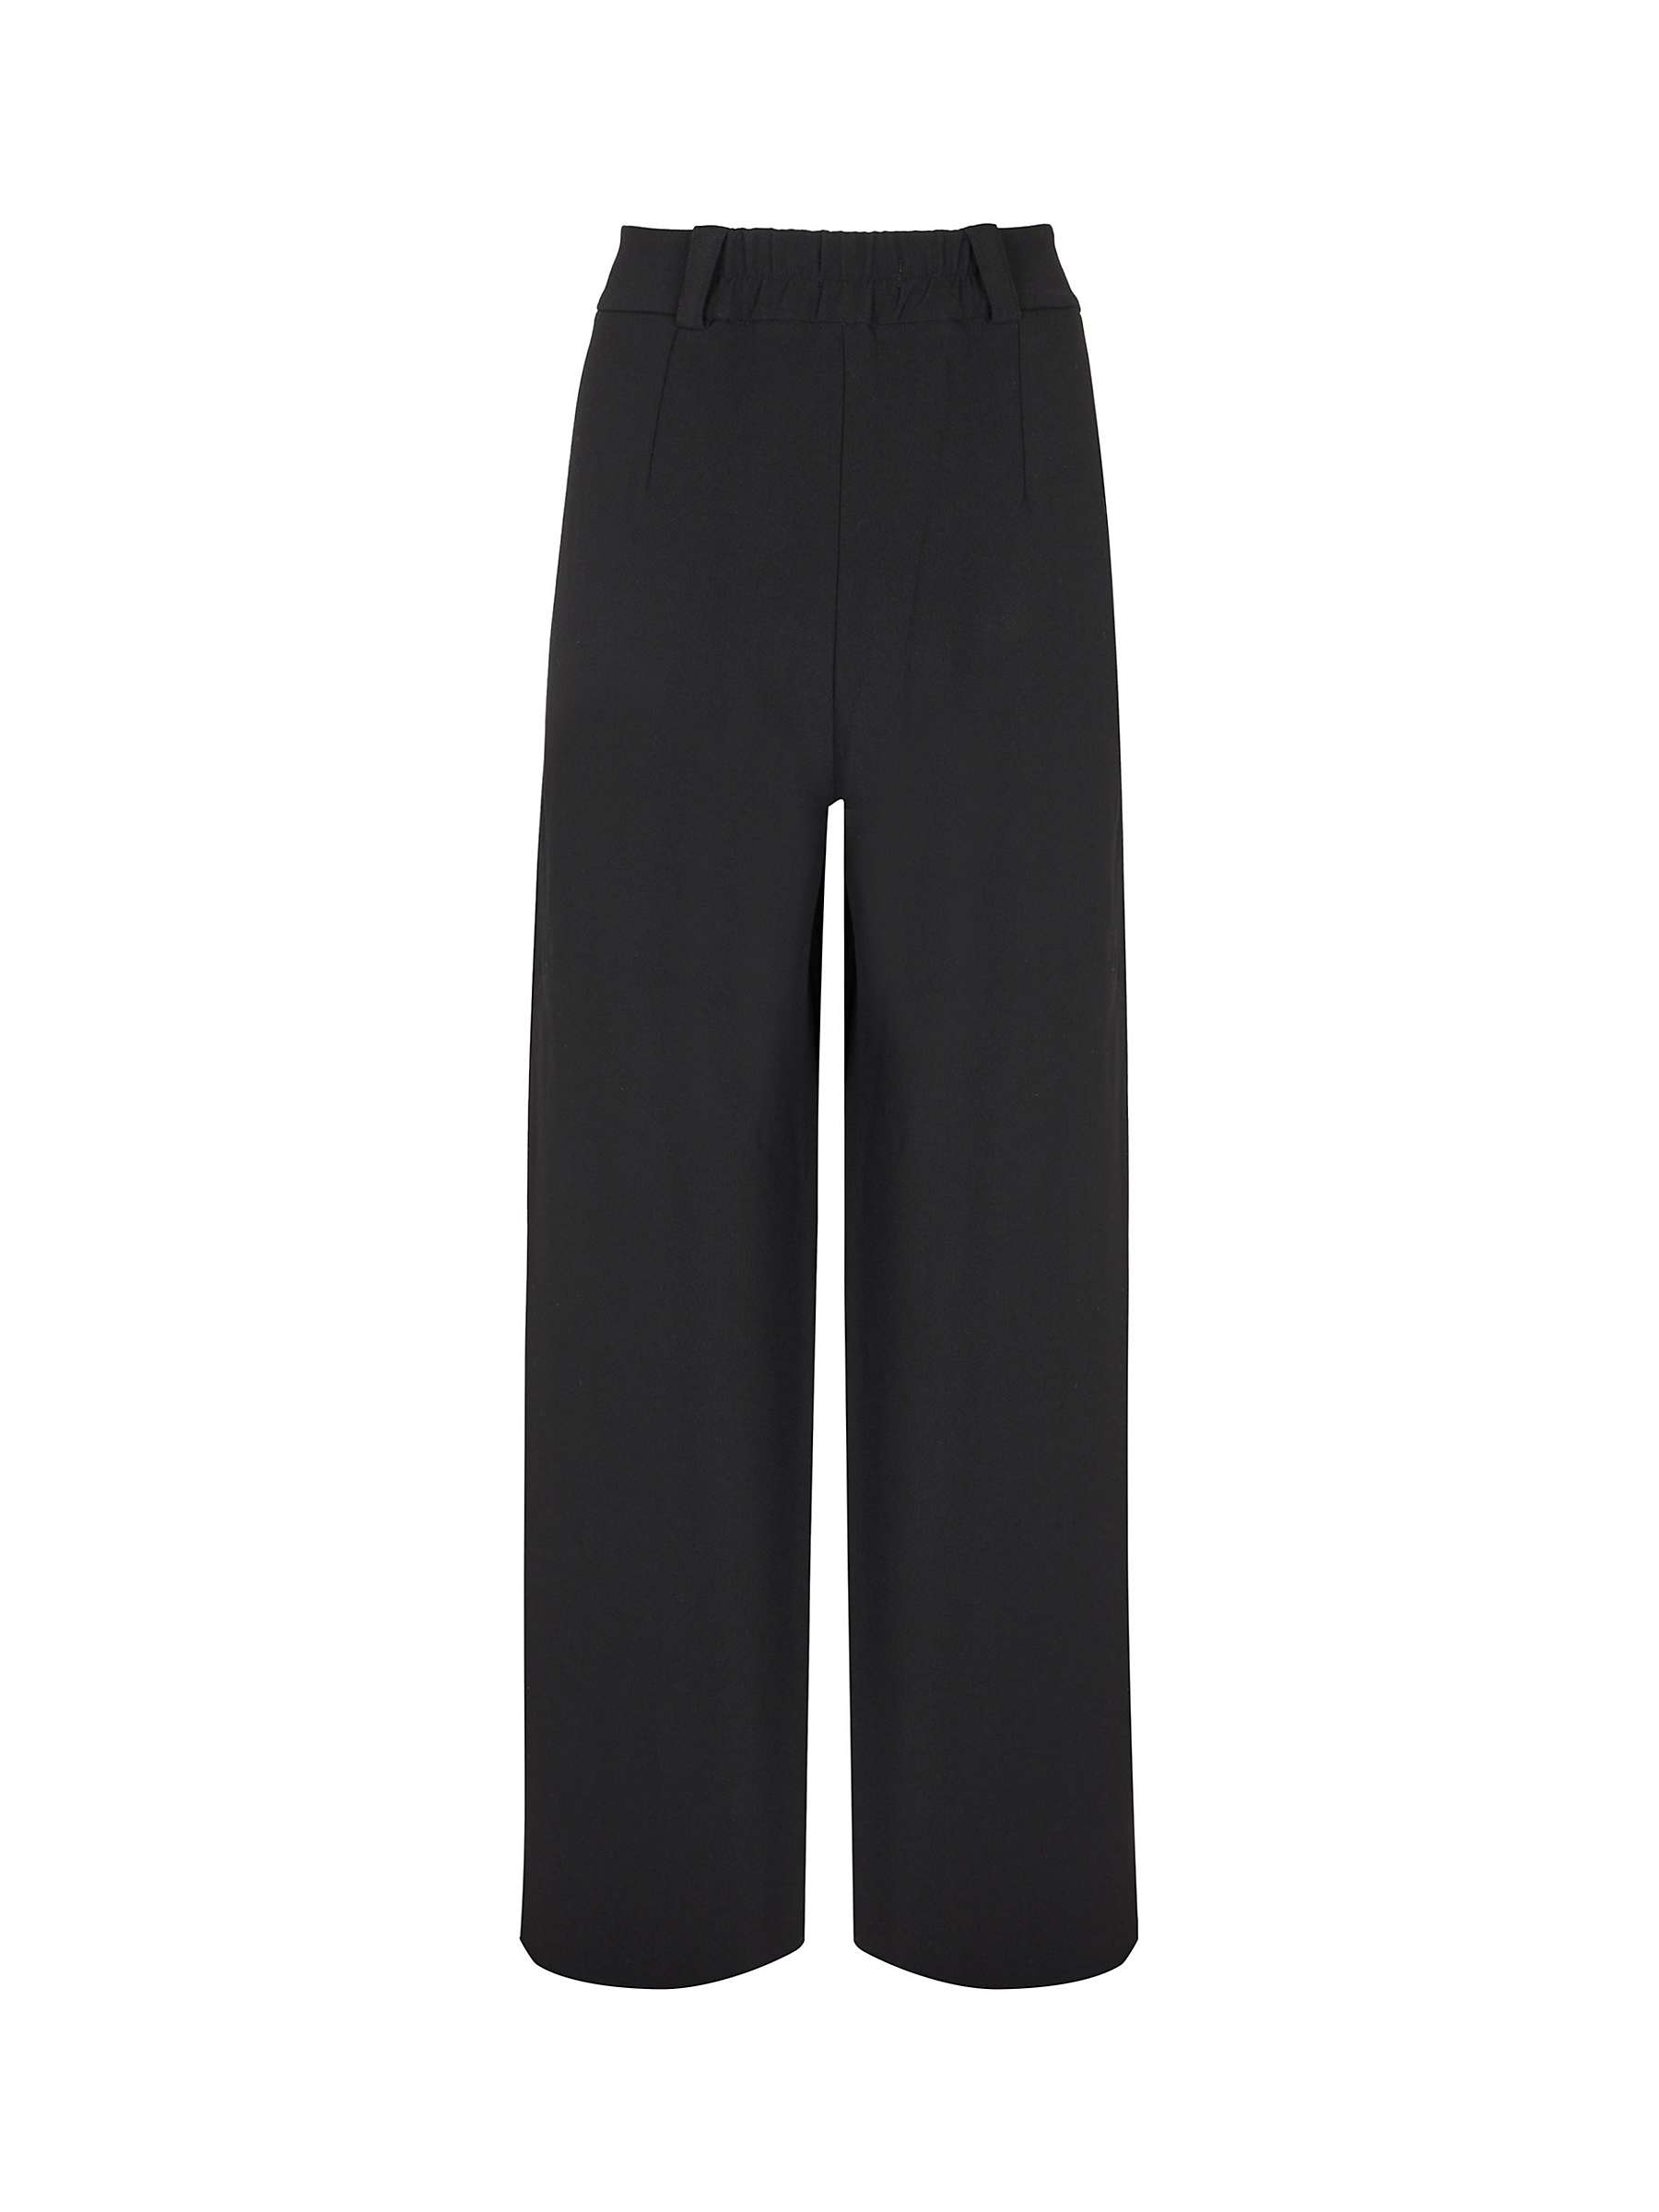 Buy Mint Velvet Straight Front Pleat Trousers, Black Online at johnlewis.com